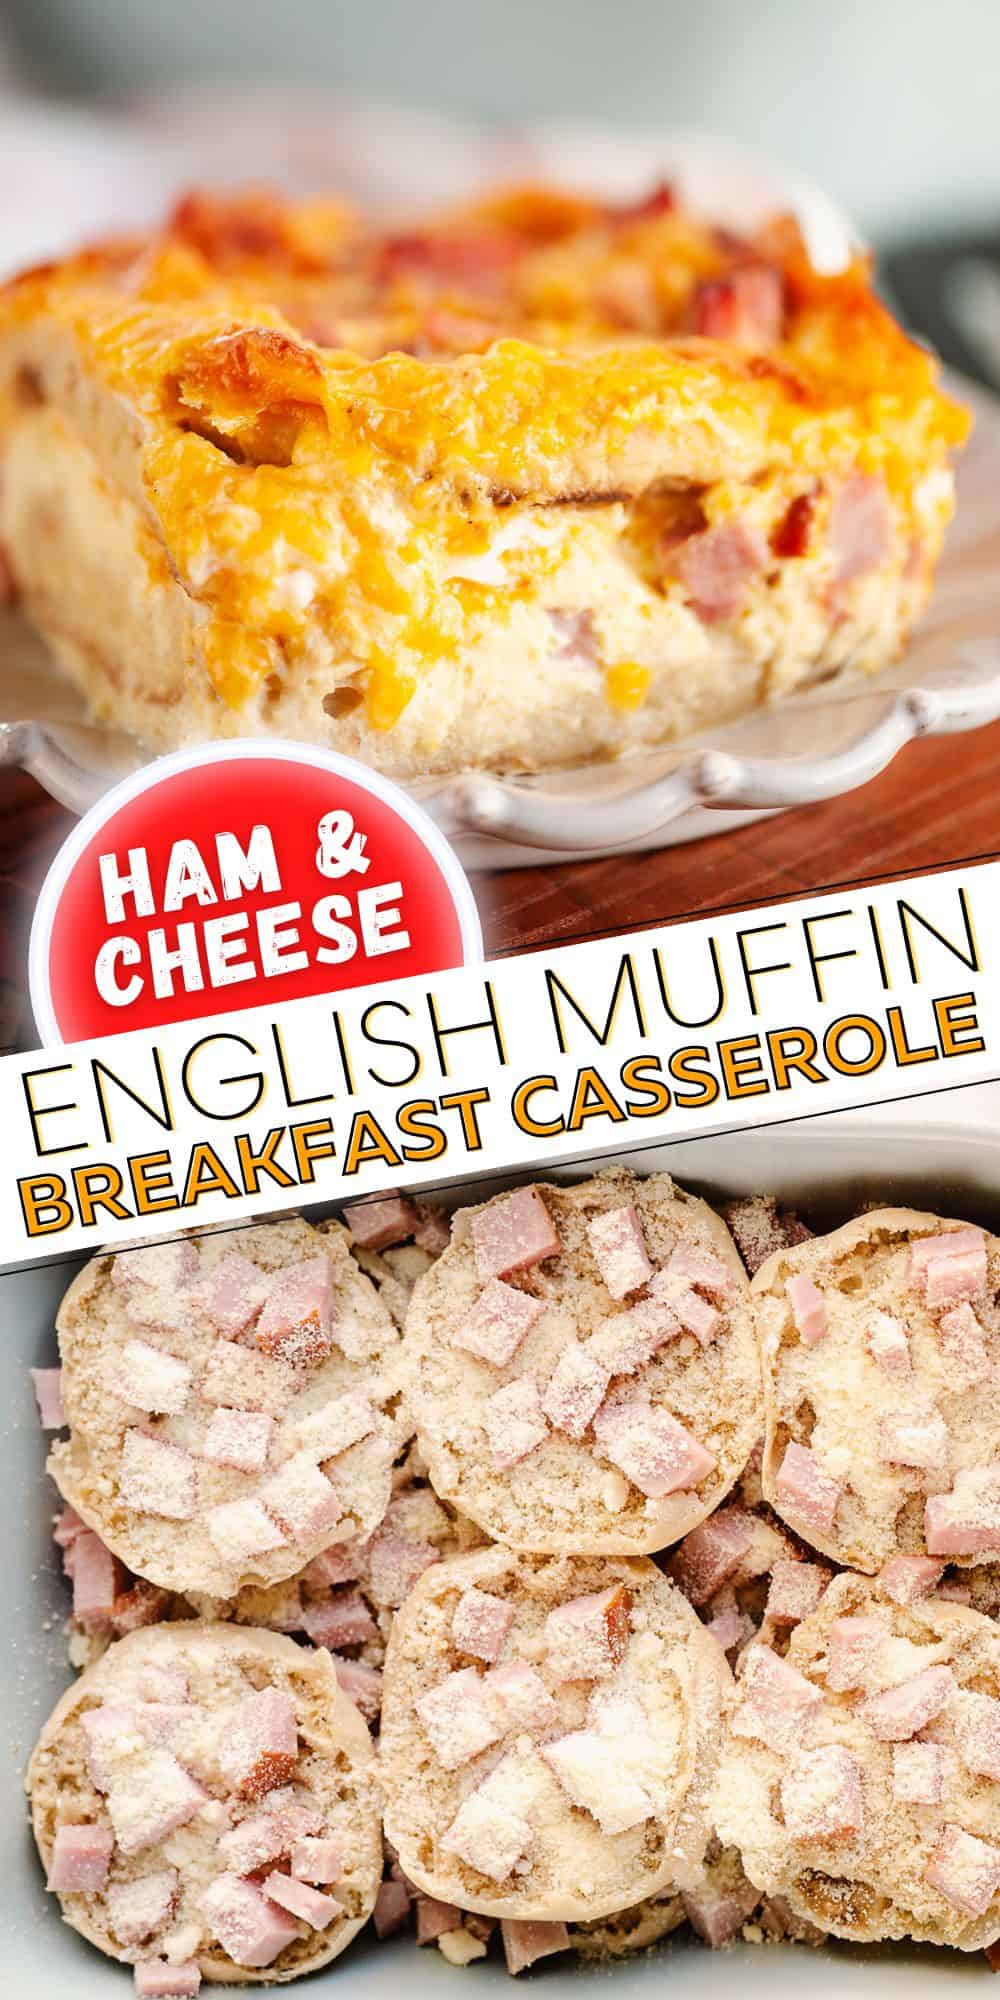 Overnight English Muffin Breakfast Casserole